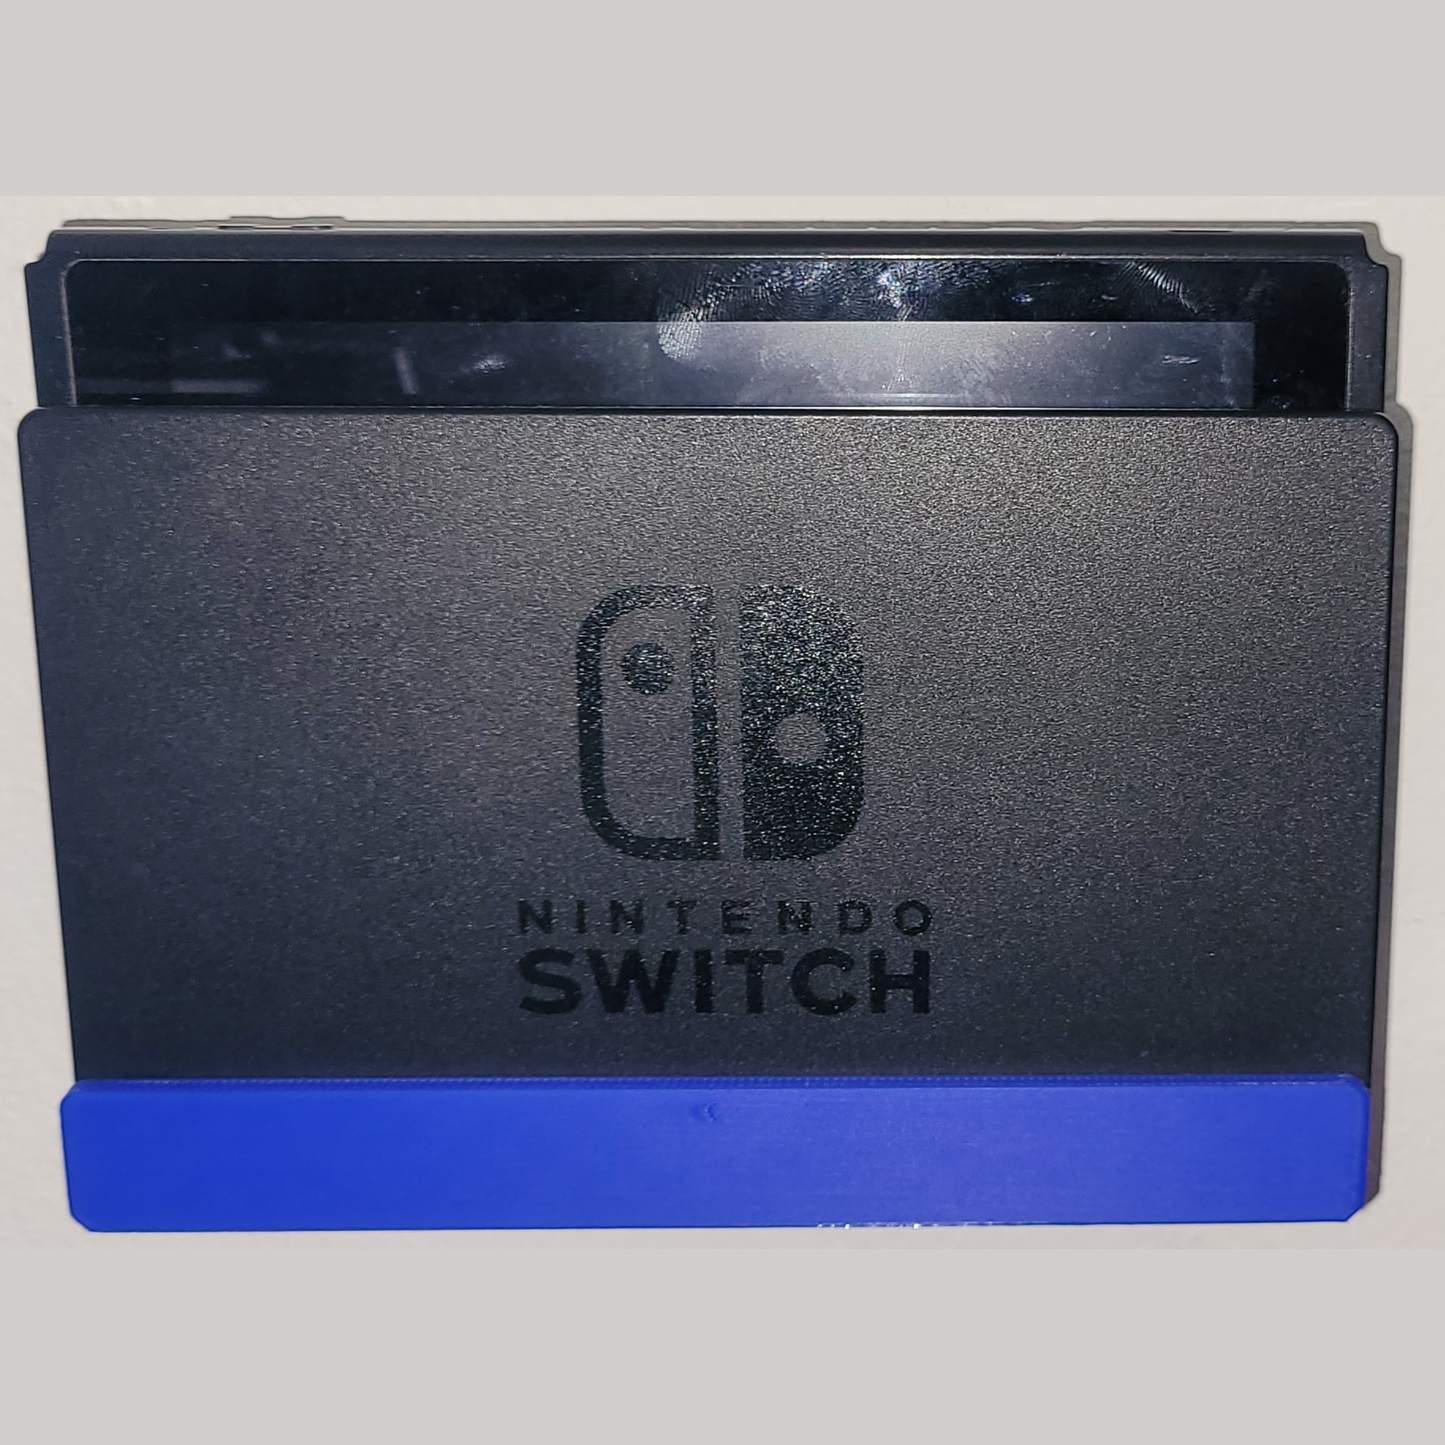 Soporte consola Nintendo Switch para pared